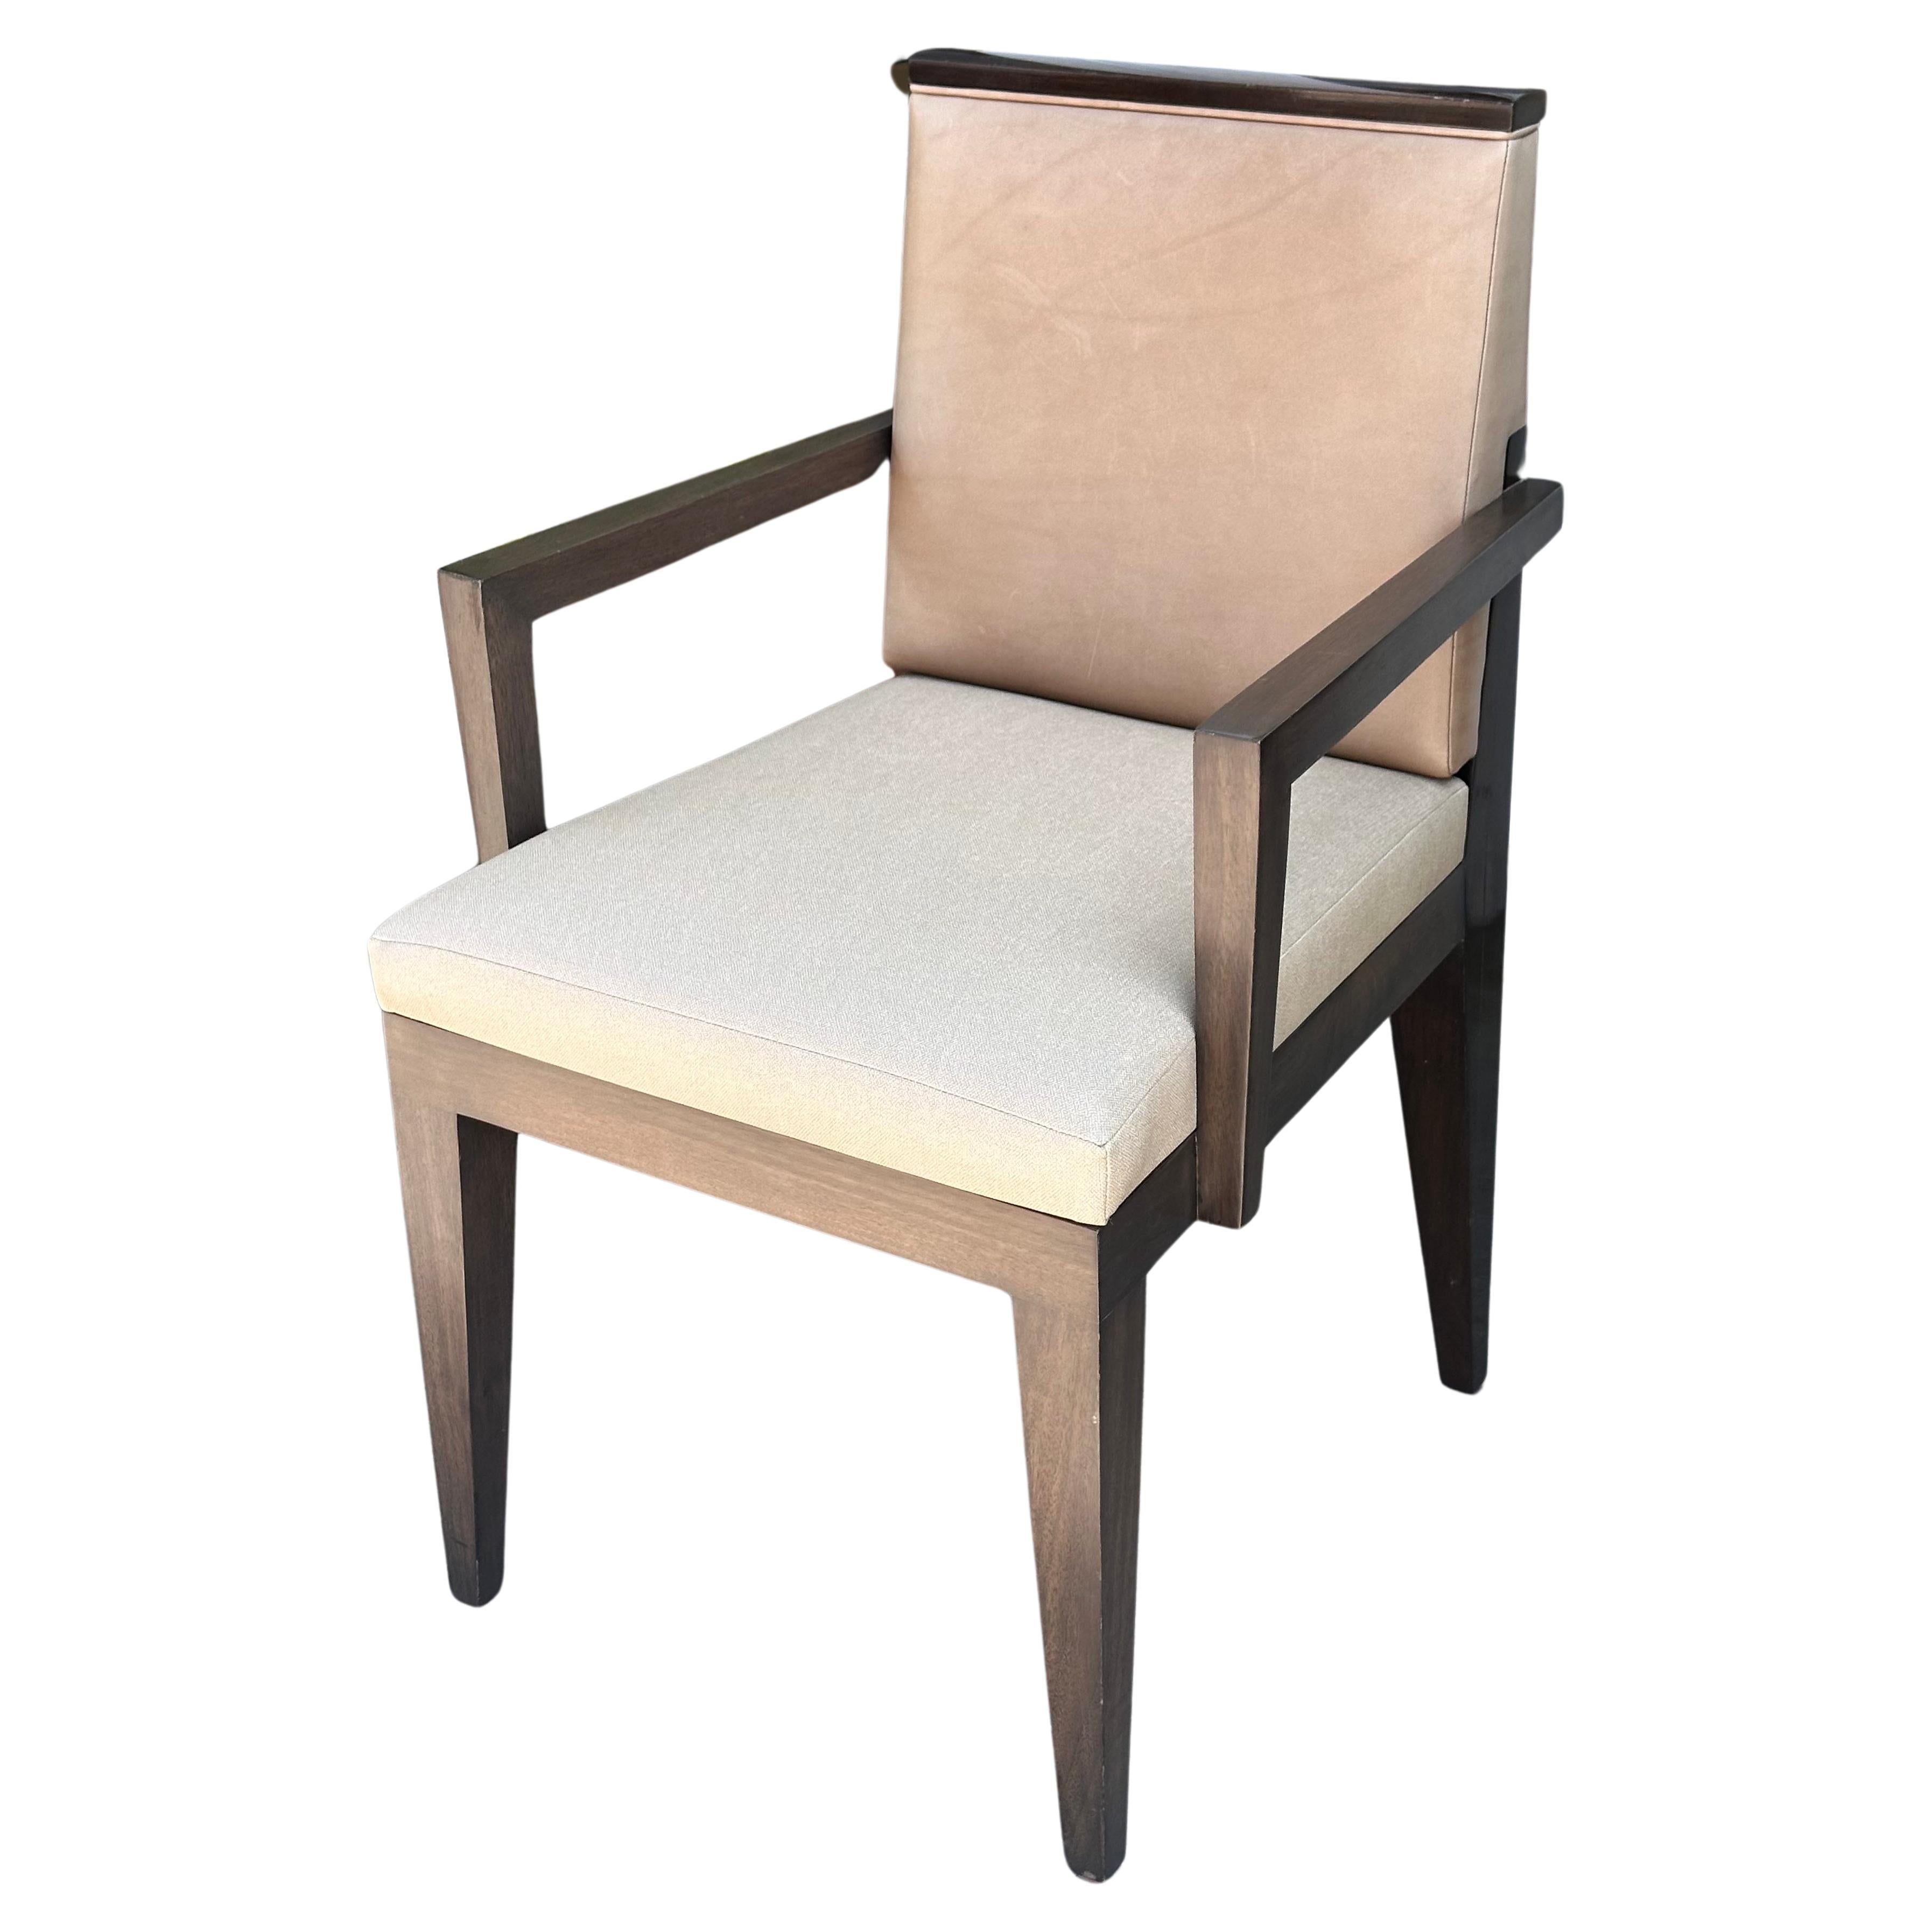 Chaise à bras en cuir Robert Marinelli, style Art Déco